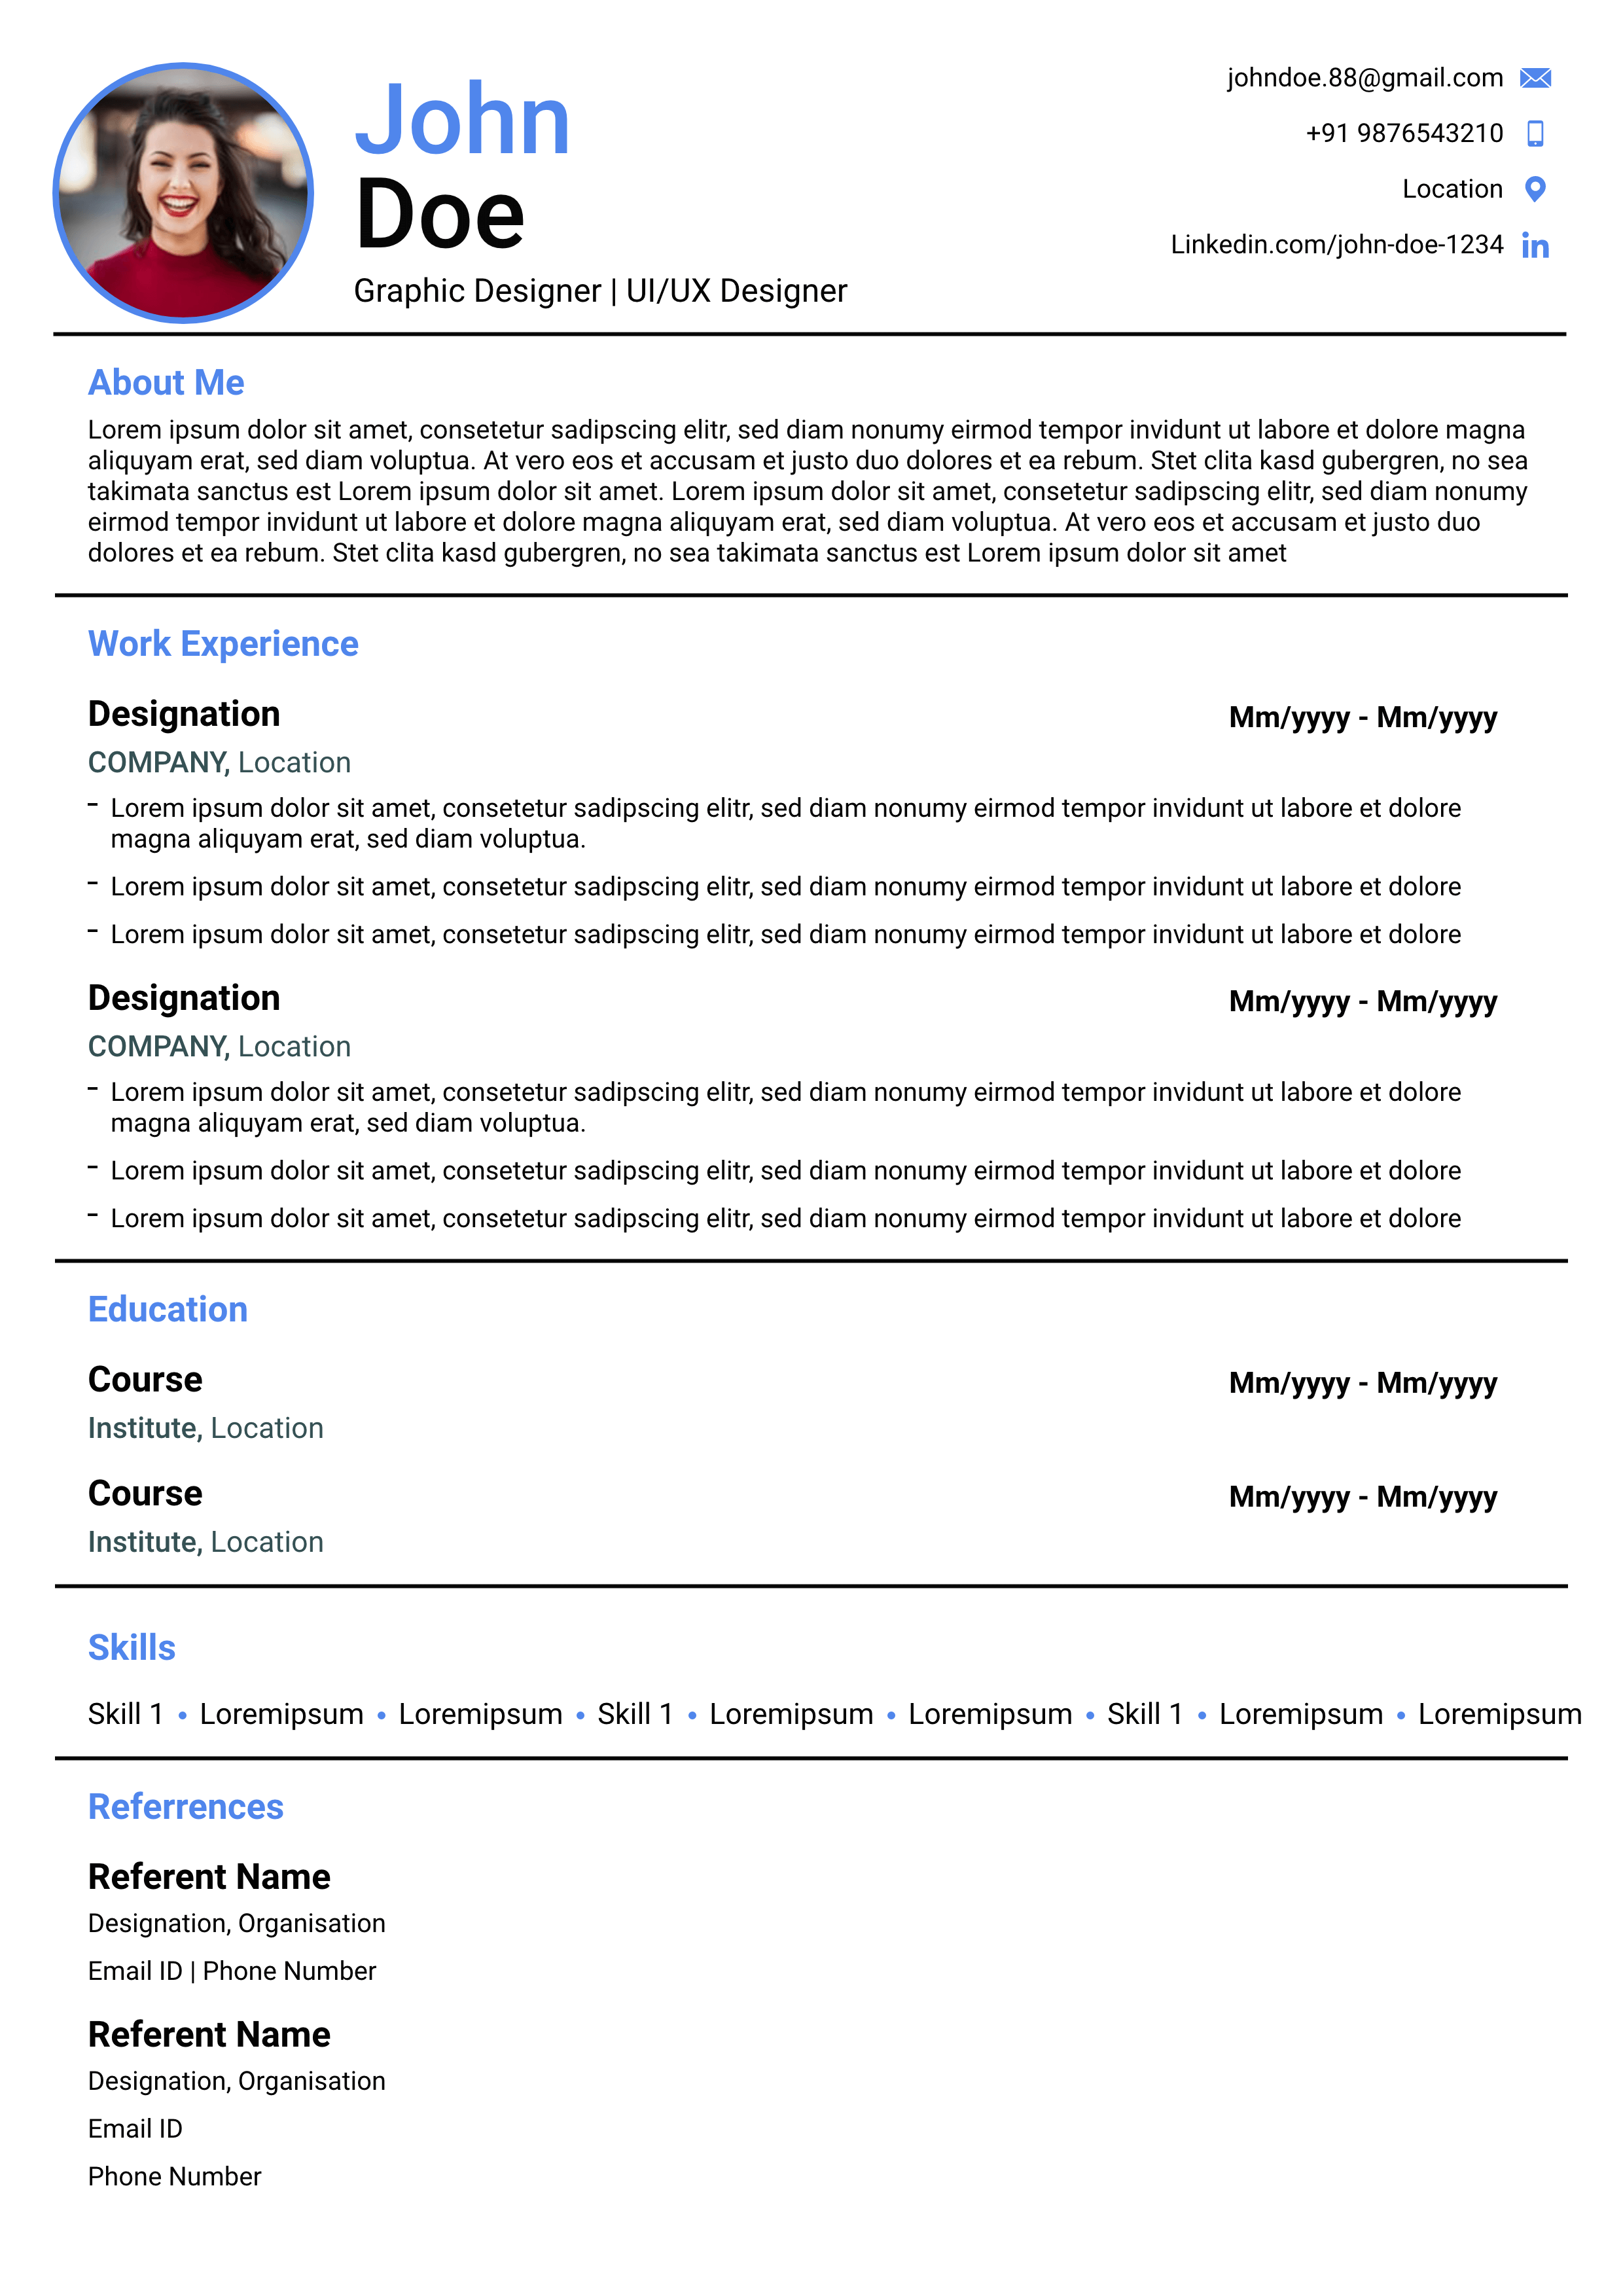 Global resume template